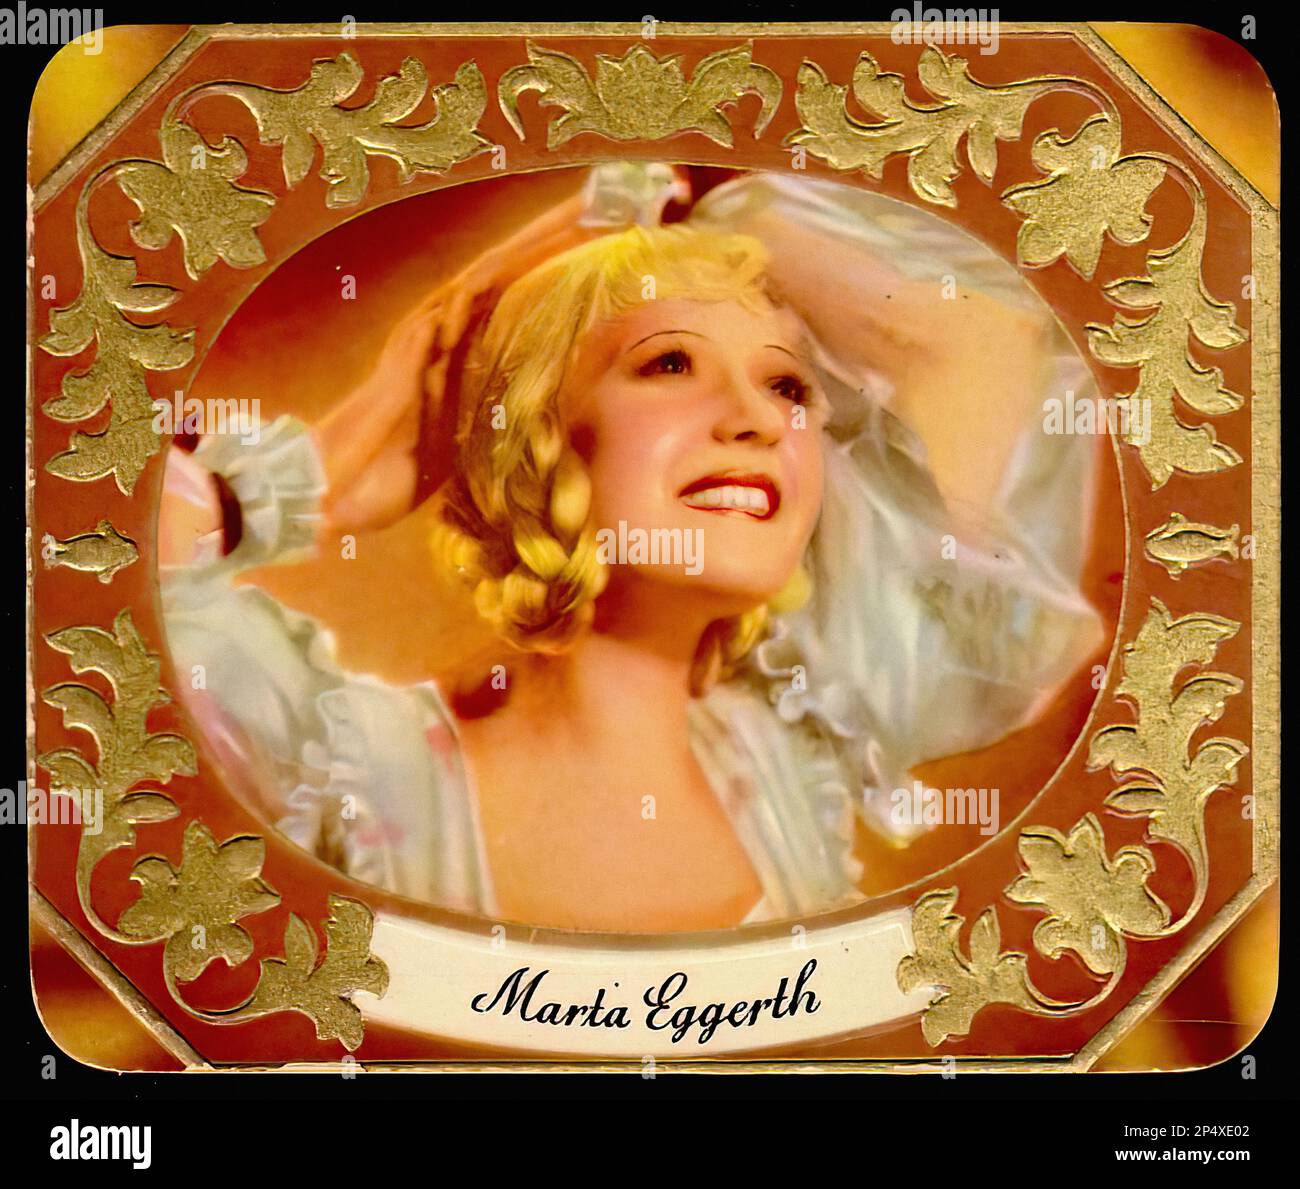 Portrait of Marta Eggerth 00020 - Vintage German Cigarette Card Stock Photo